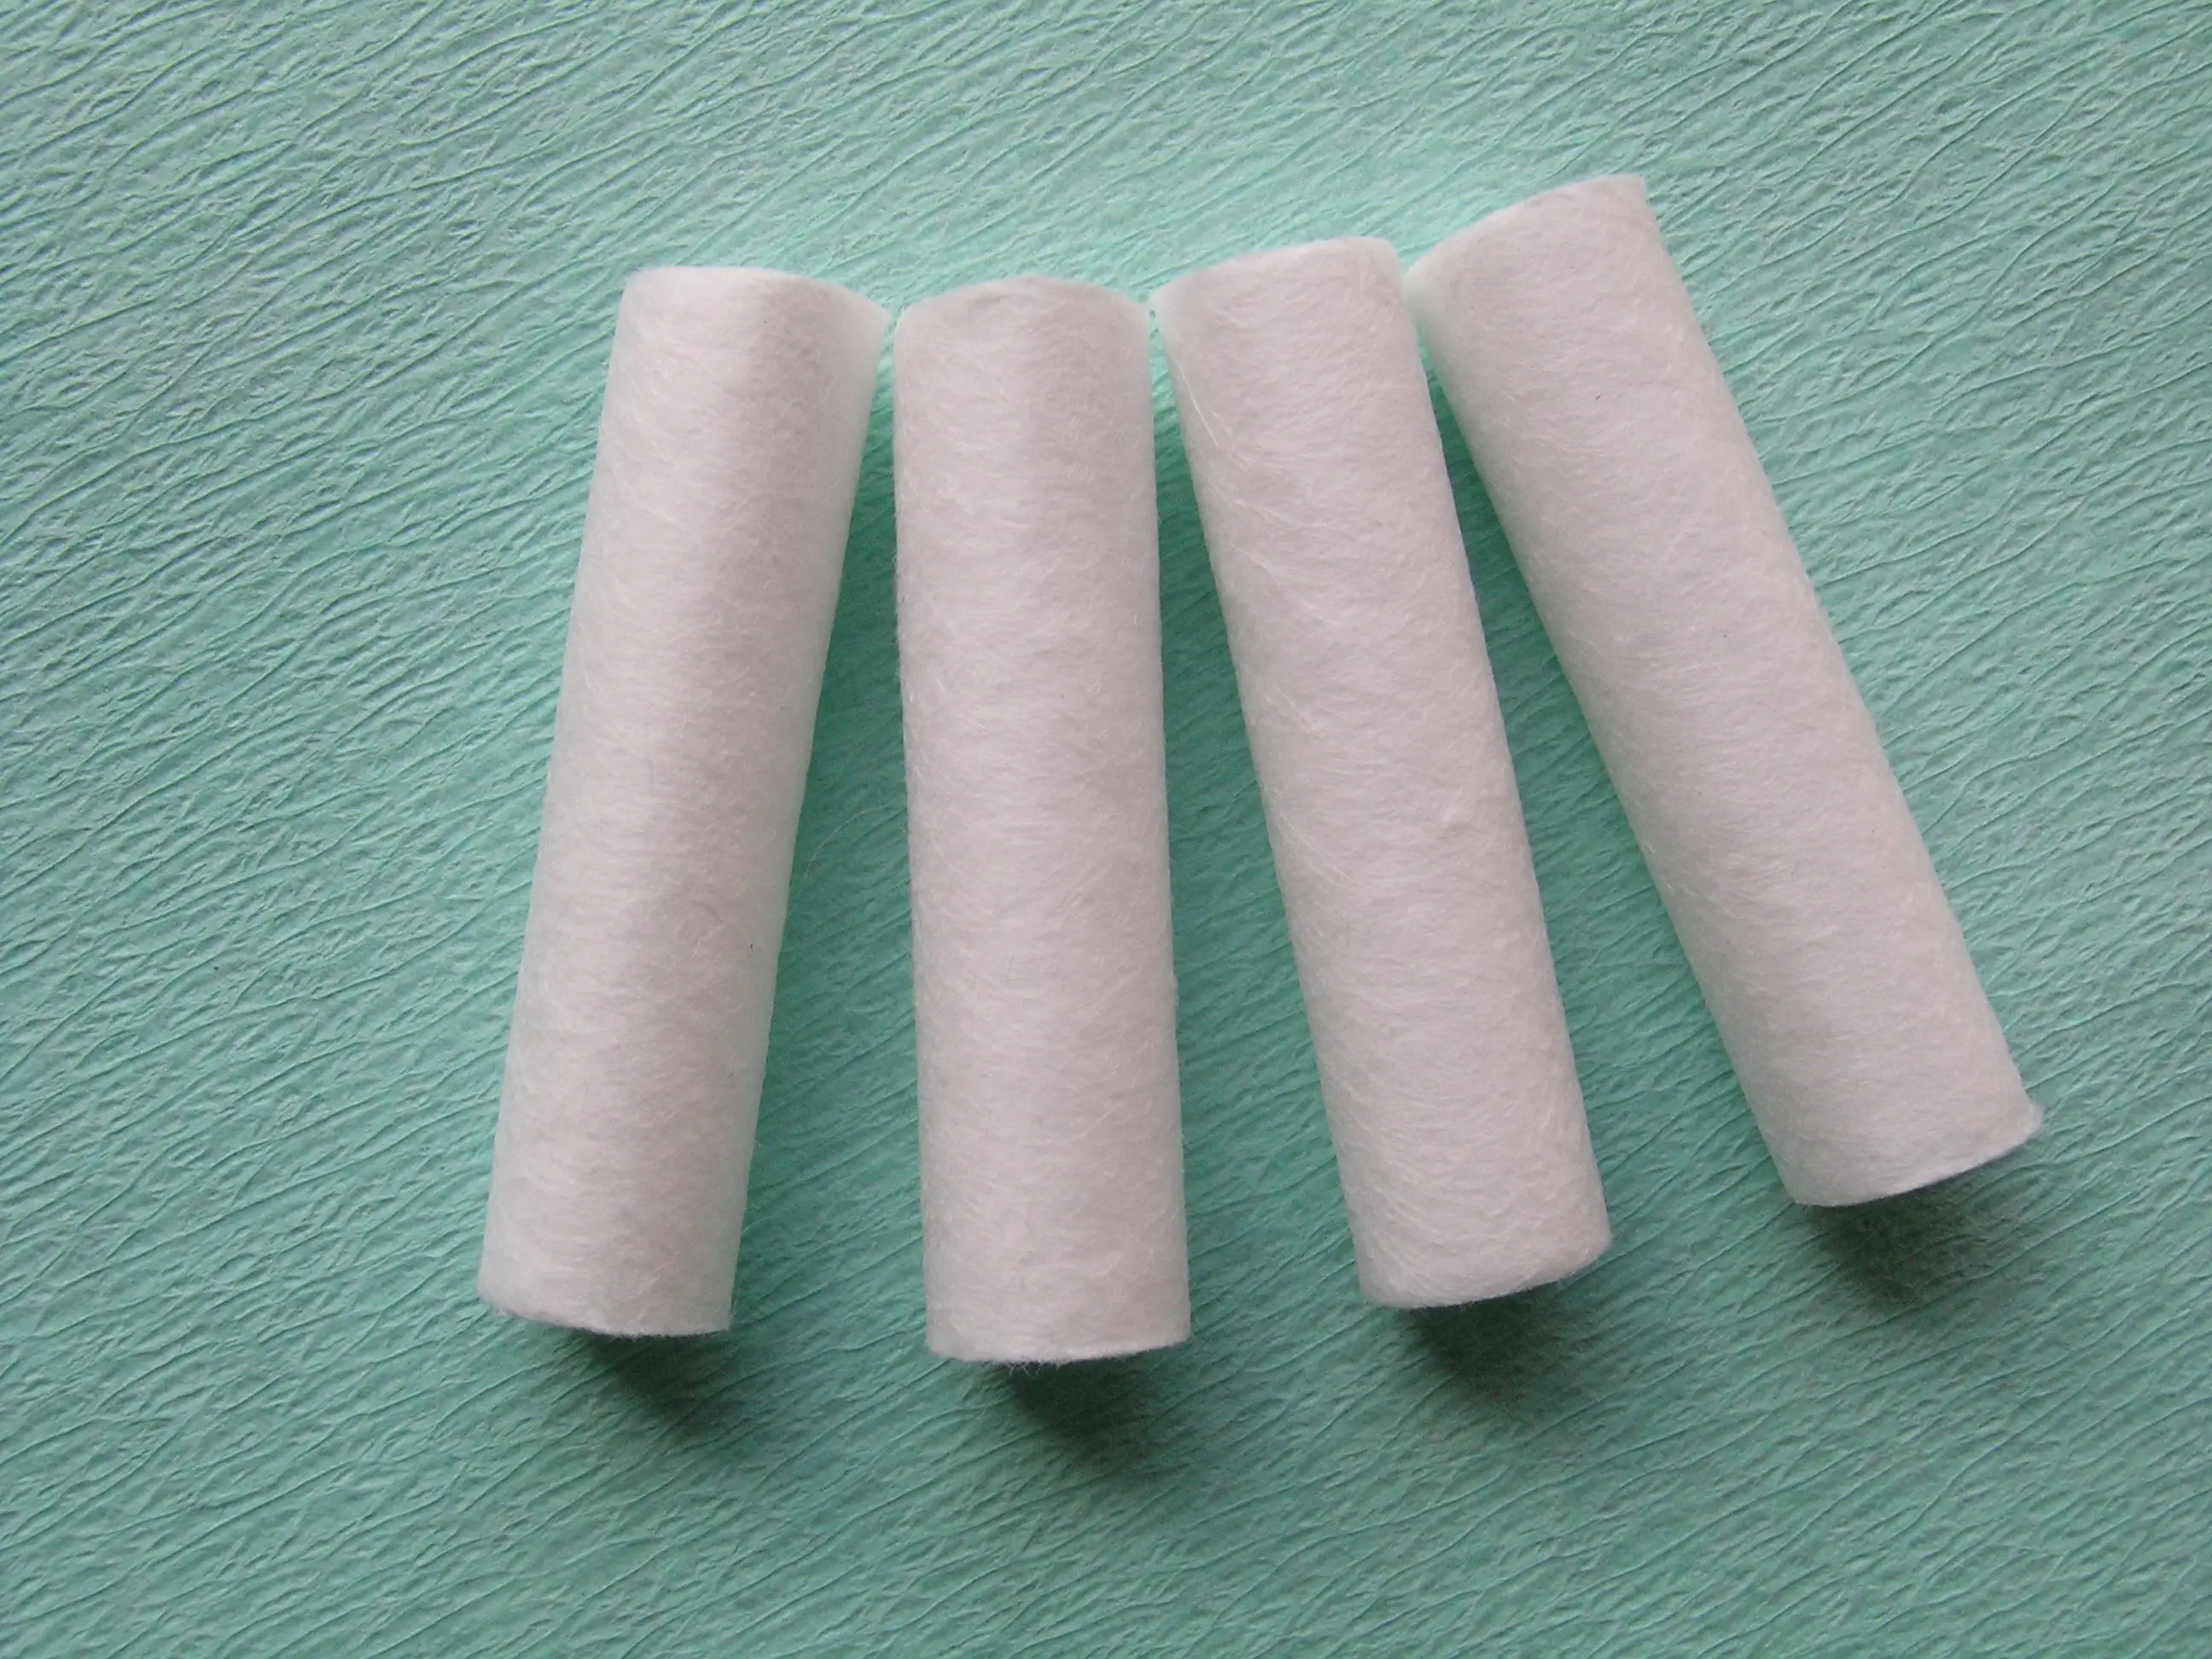  Premium Dental Cotton Rolls #2 Medium 1.5 x 3/8 Extra  Absorbent Non-Sterile Cotton Roll (100 Pack) : Industrial & Scientific